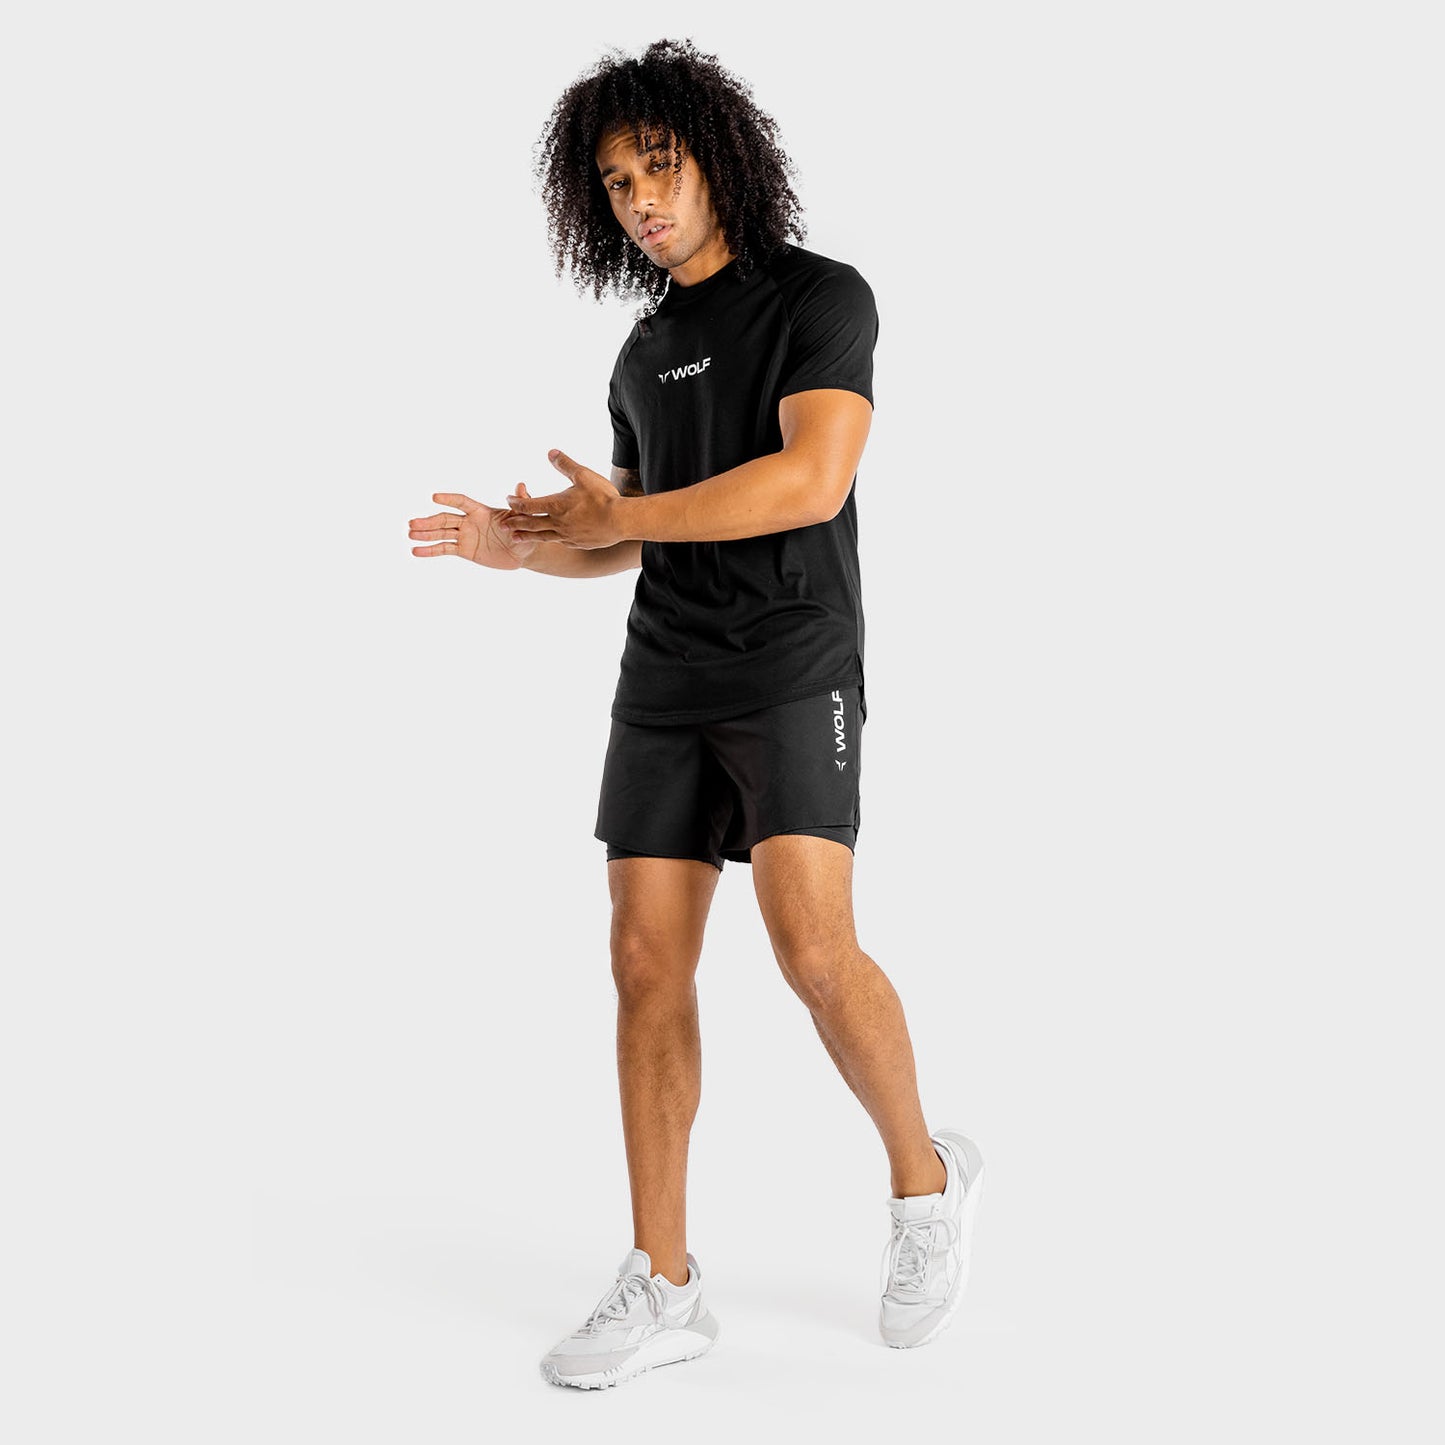 squatwolf-workout-shirts-for-men-primal-men-tee-black-gym-wear